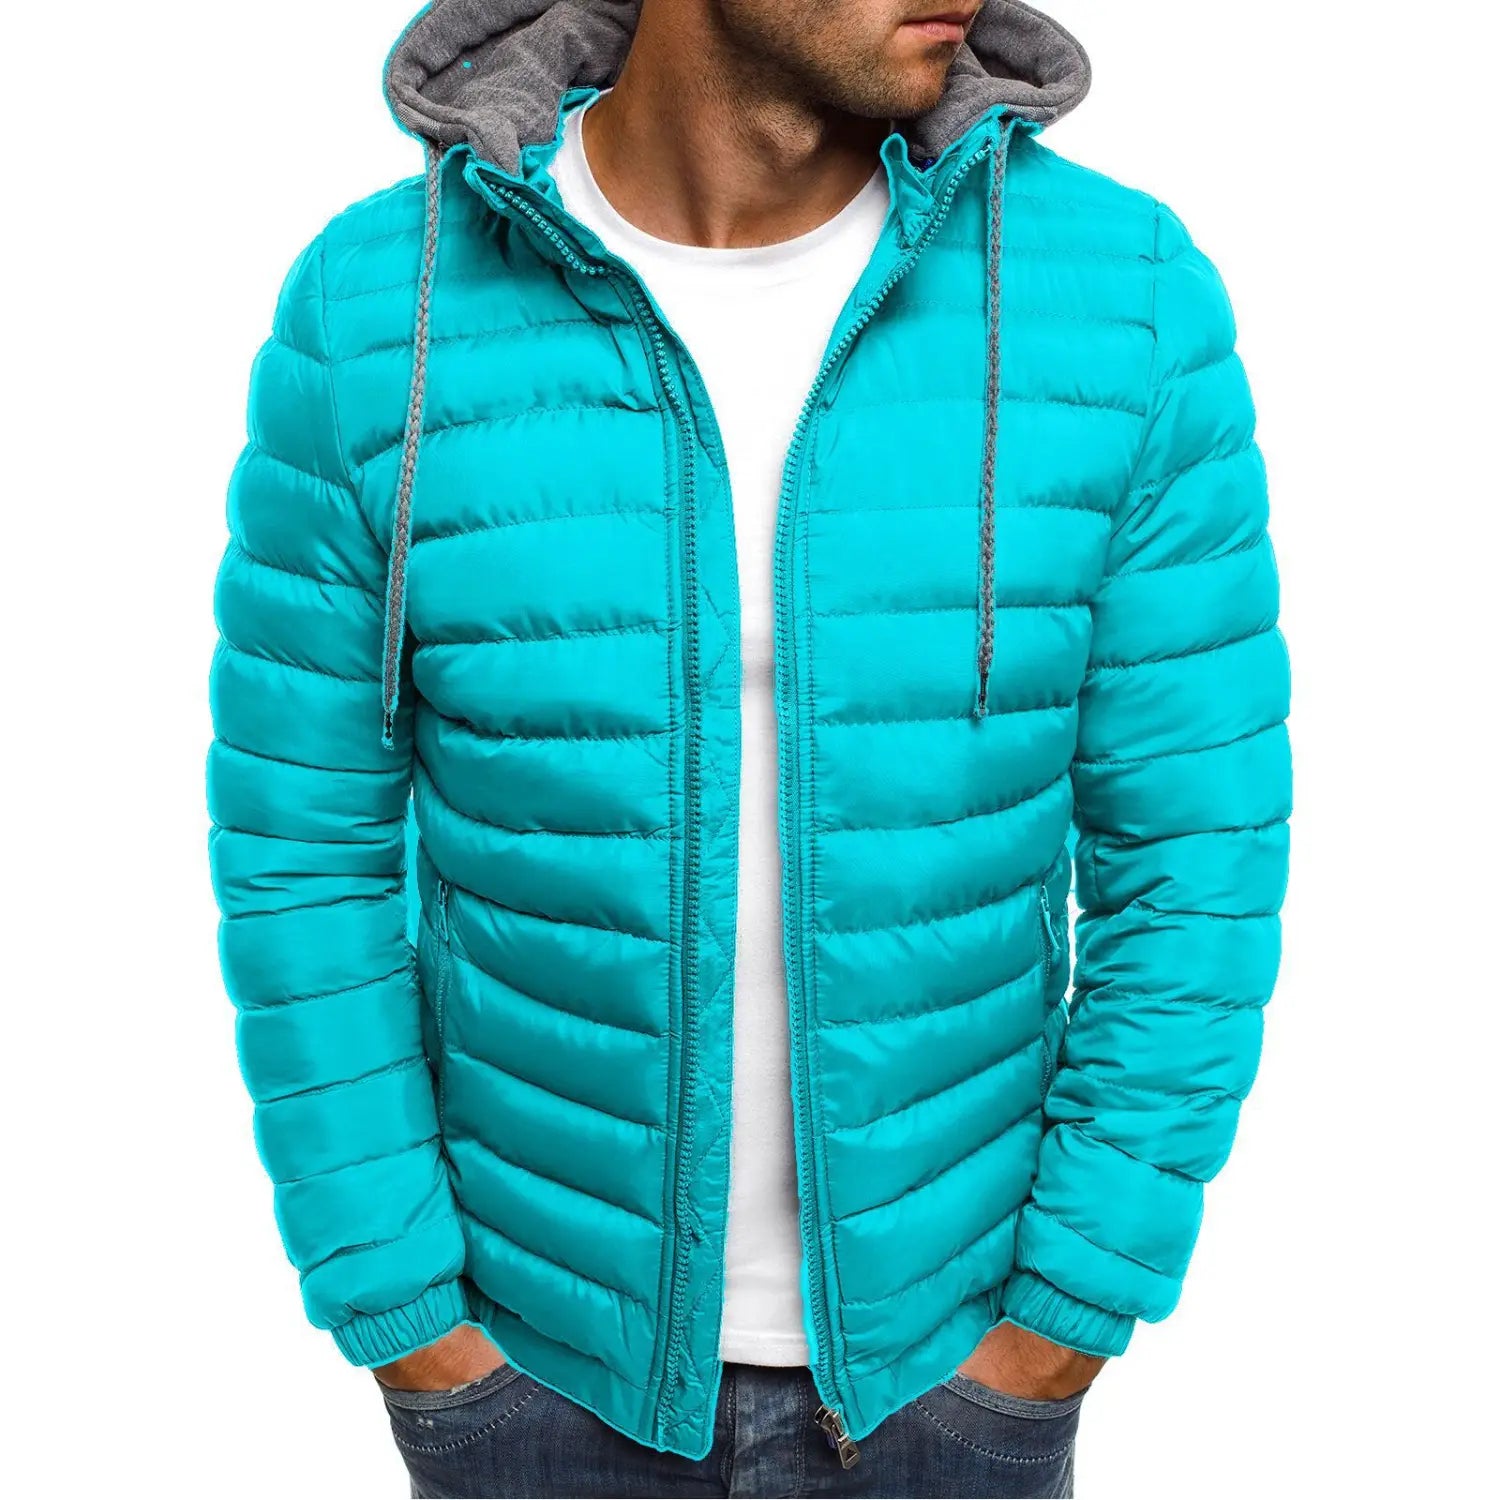 Lovemi - Warm Hooded Casual Cotton Jacket